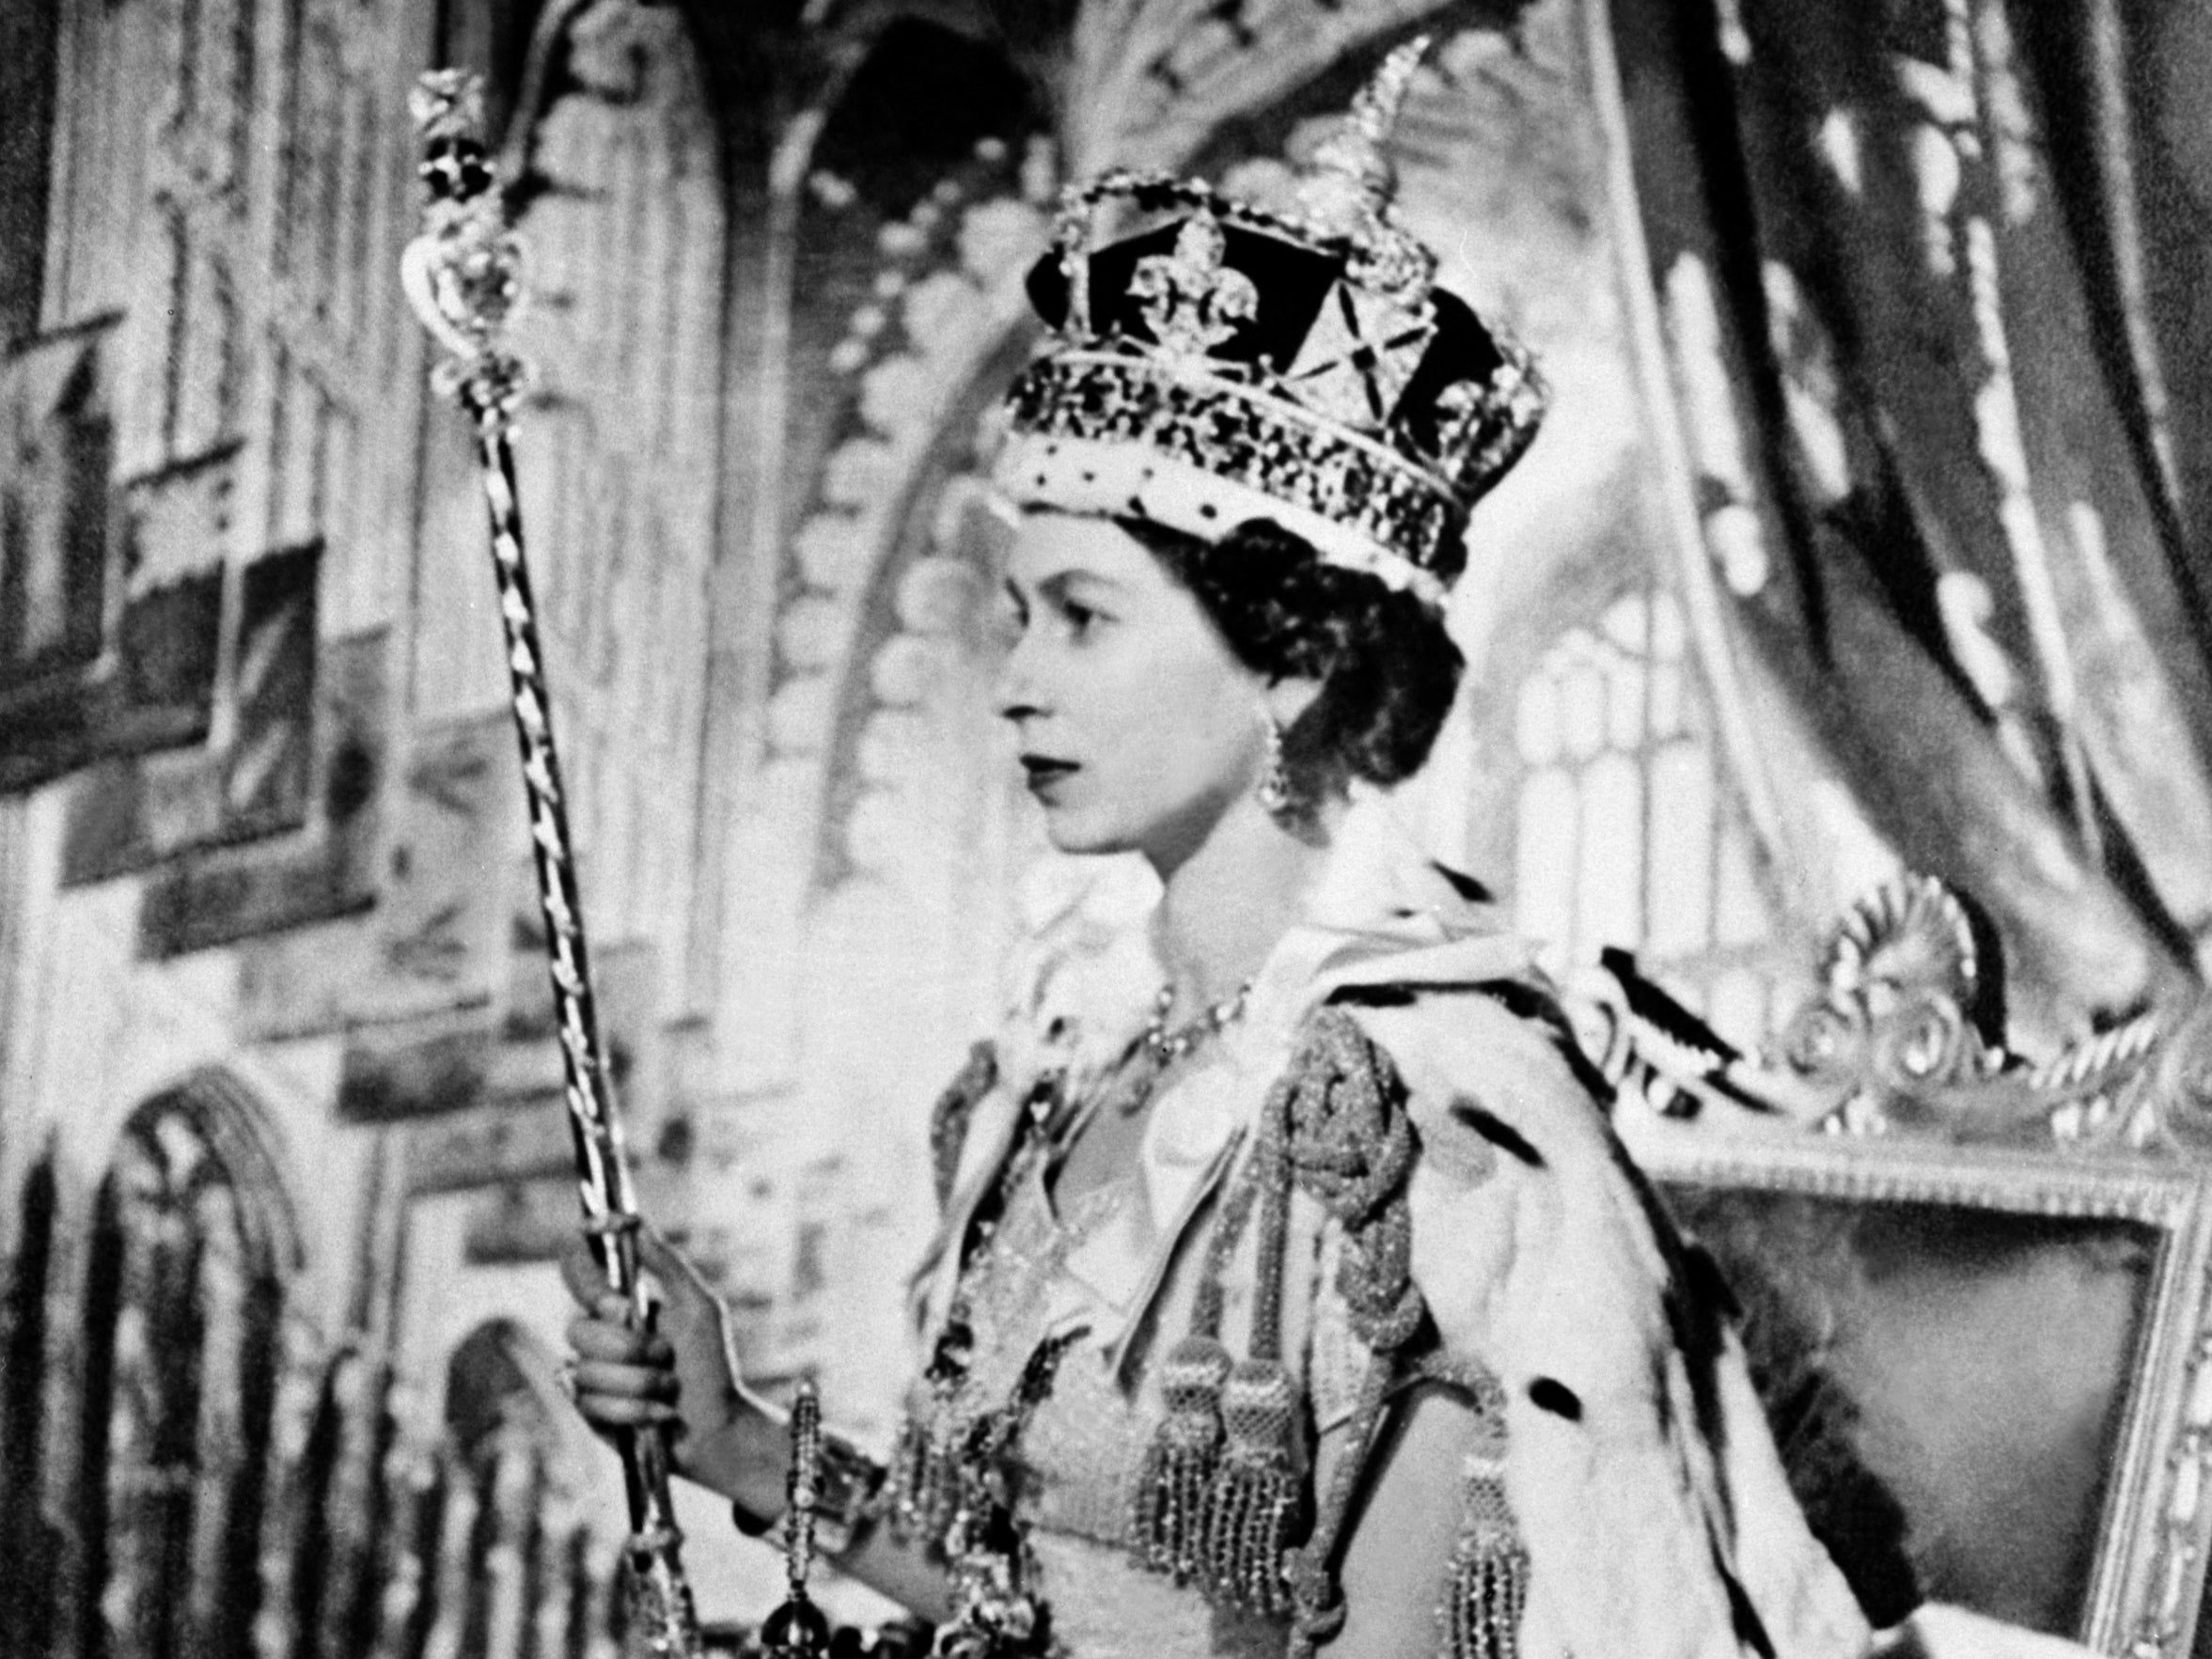 Queen Elizabeth II on her coronation day in 1953